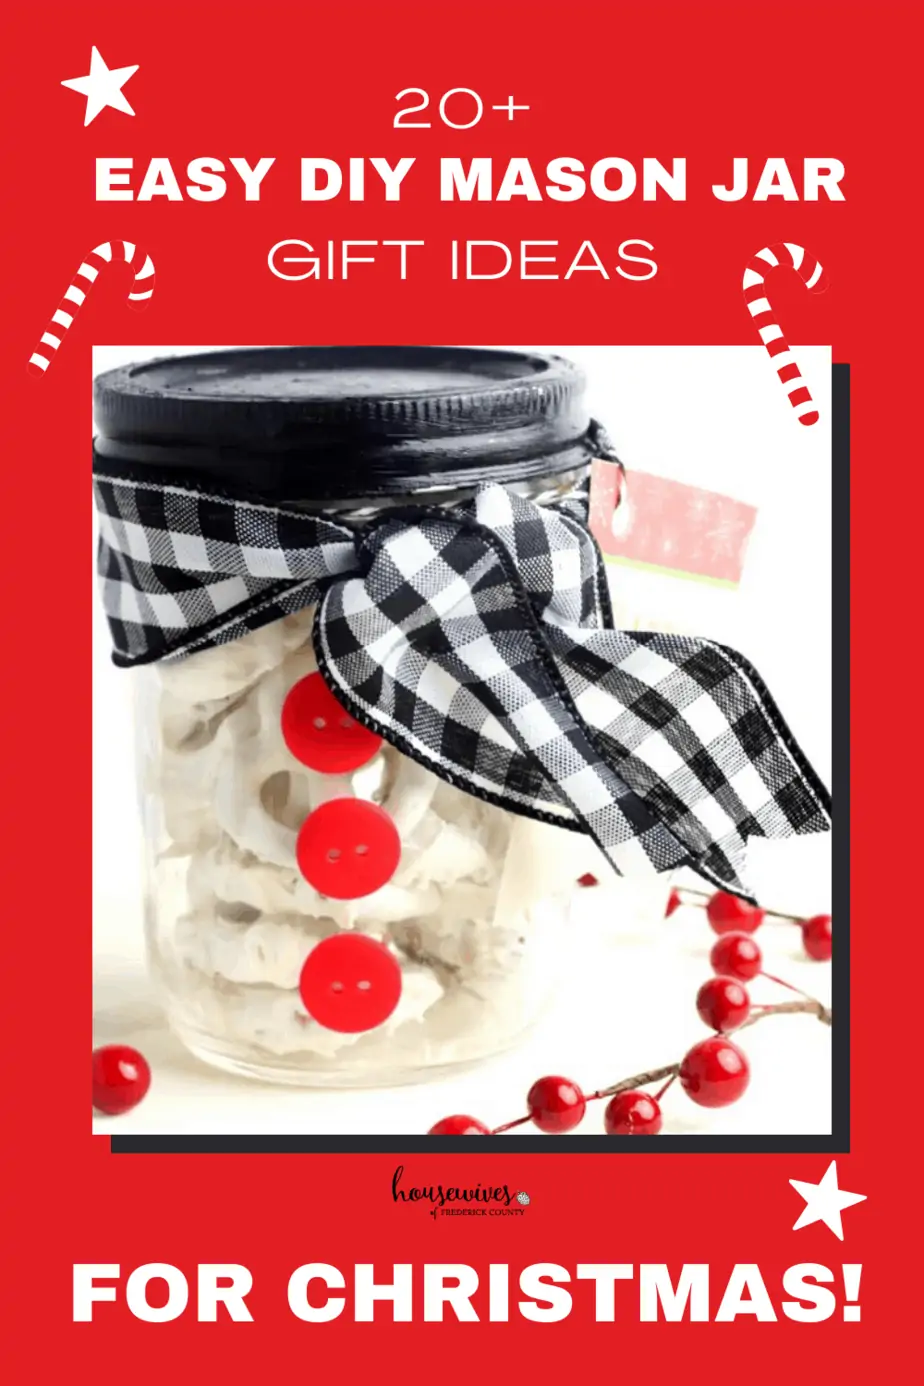 20+ Easy DIY Mason Jar Gift Ideas for Christmas